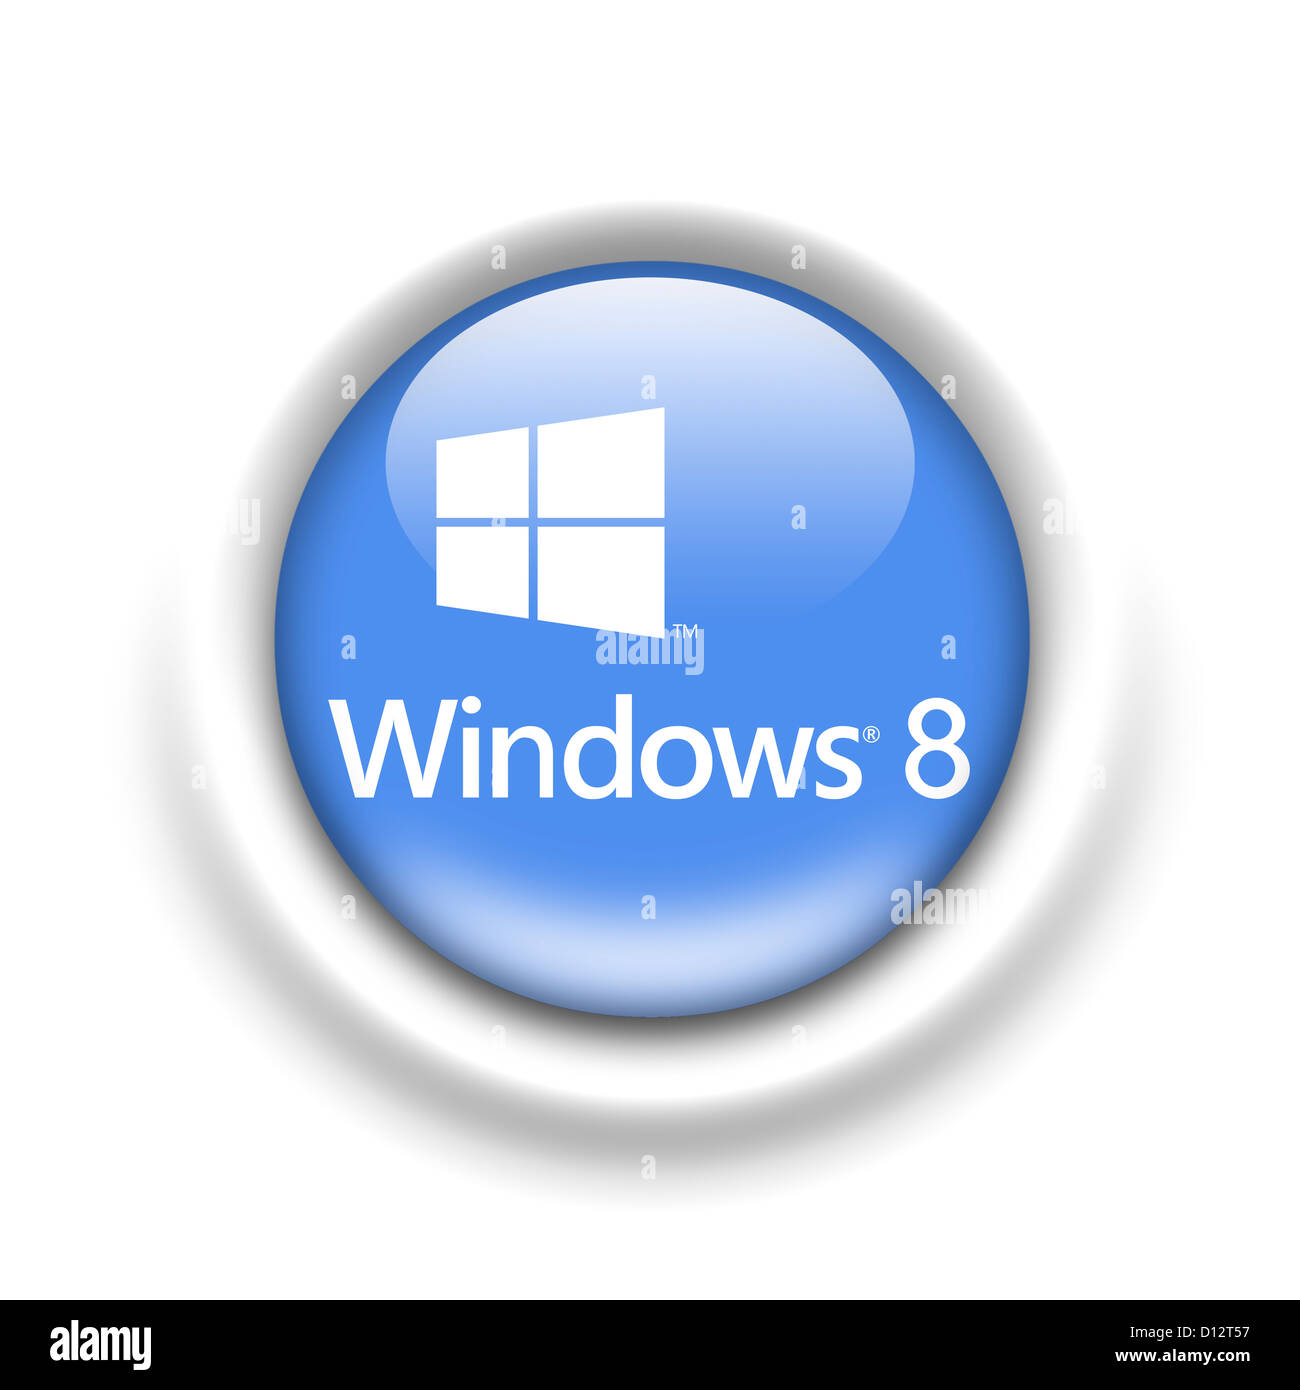 Windows 8 logo Stock Photo